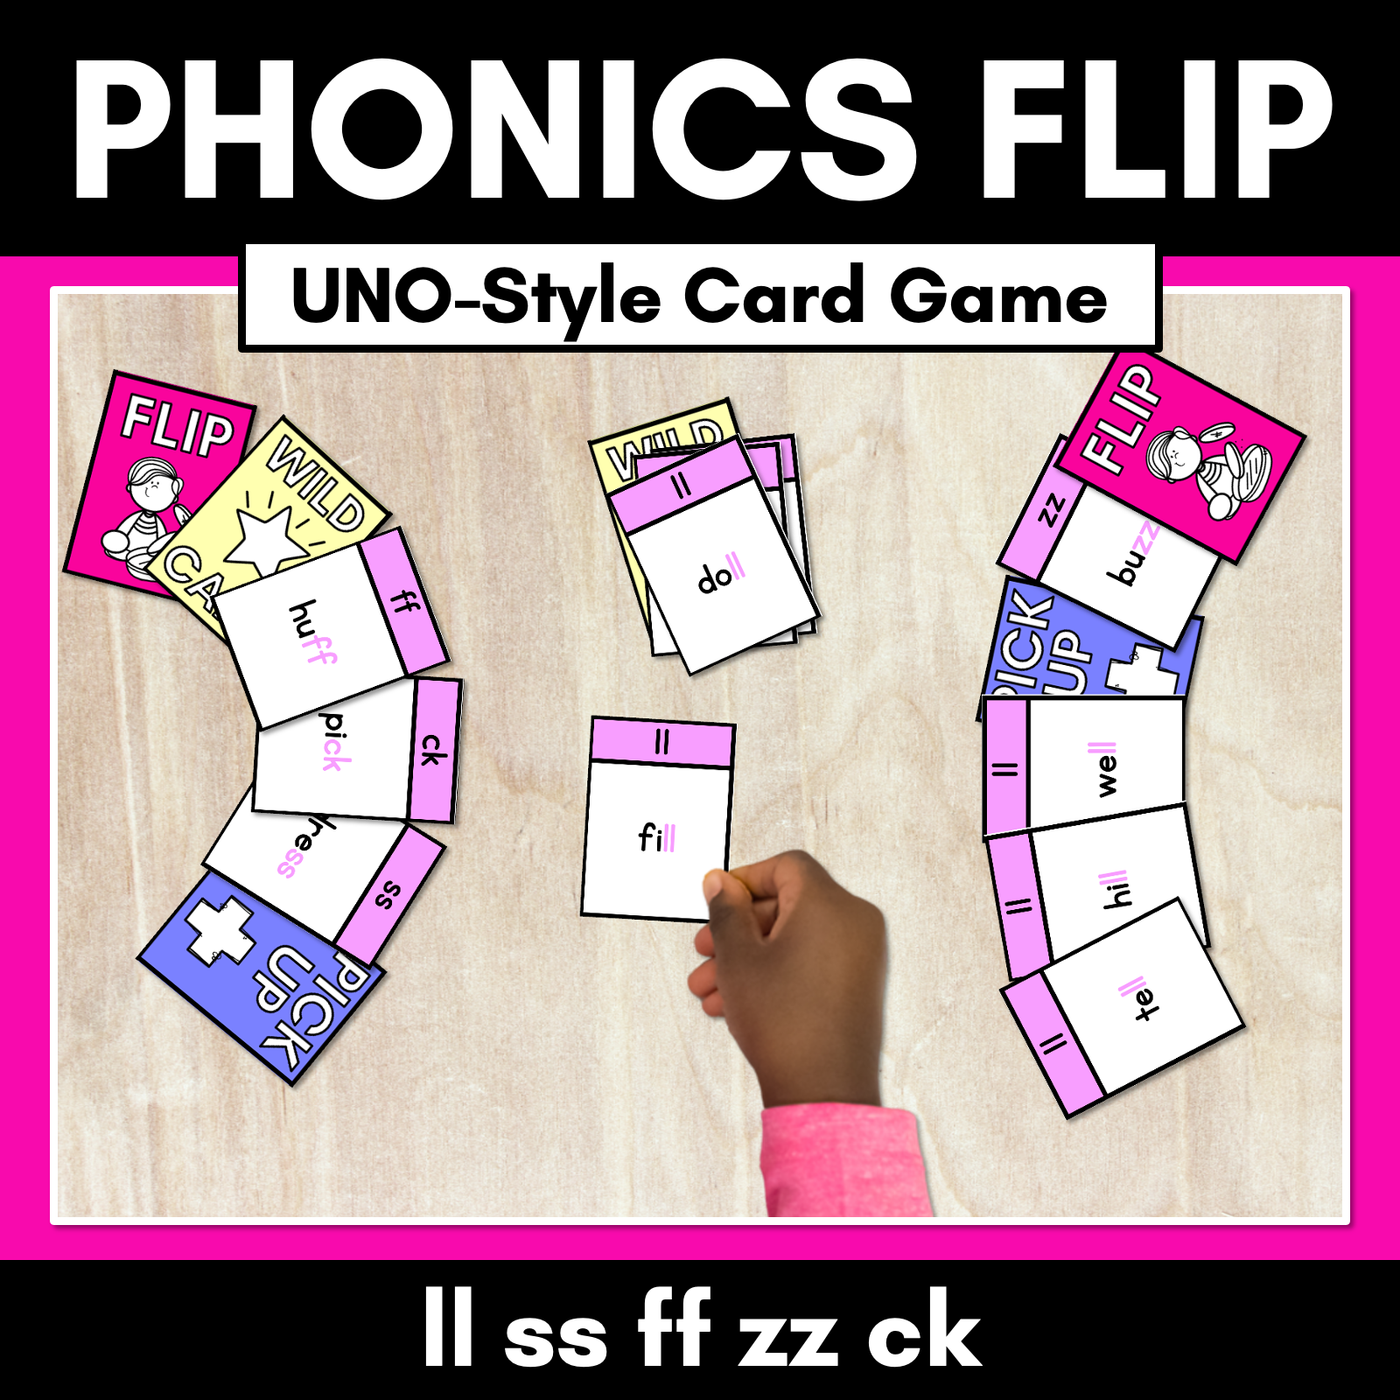 LL SS FF ZZ CK Card Game - Phonics Flip for Consonant Digraphs